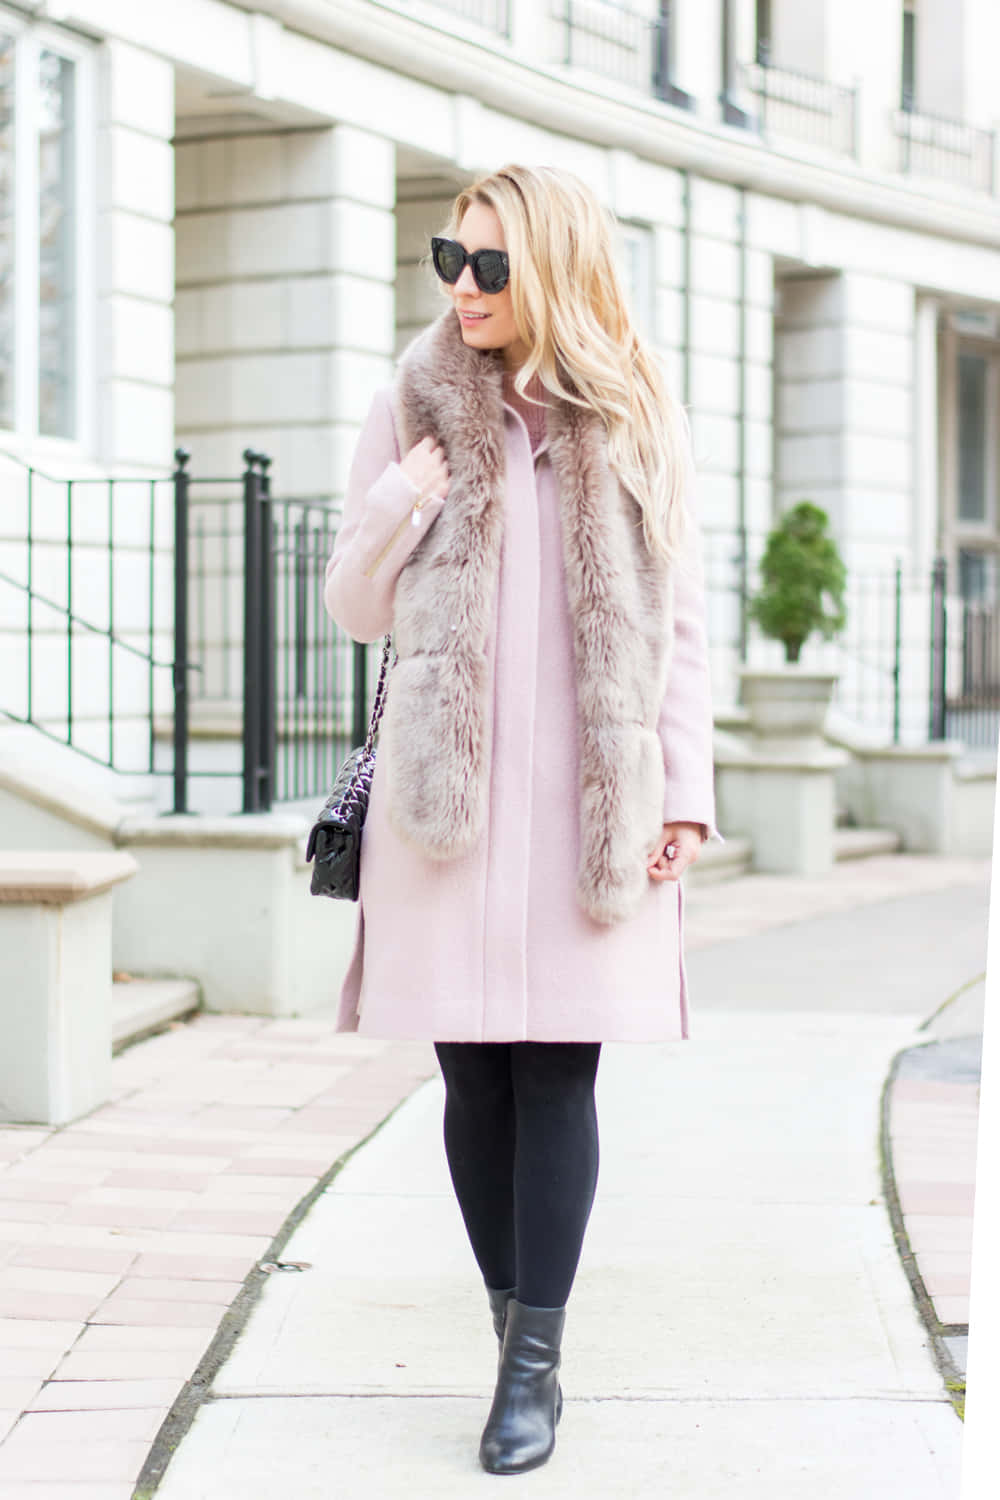 Elegant woman in a stylish pink coat Wallpaper